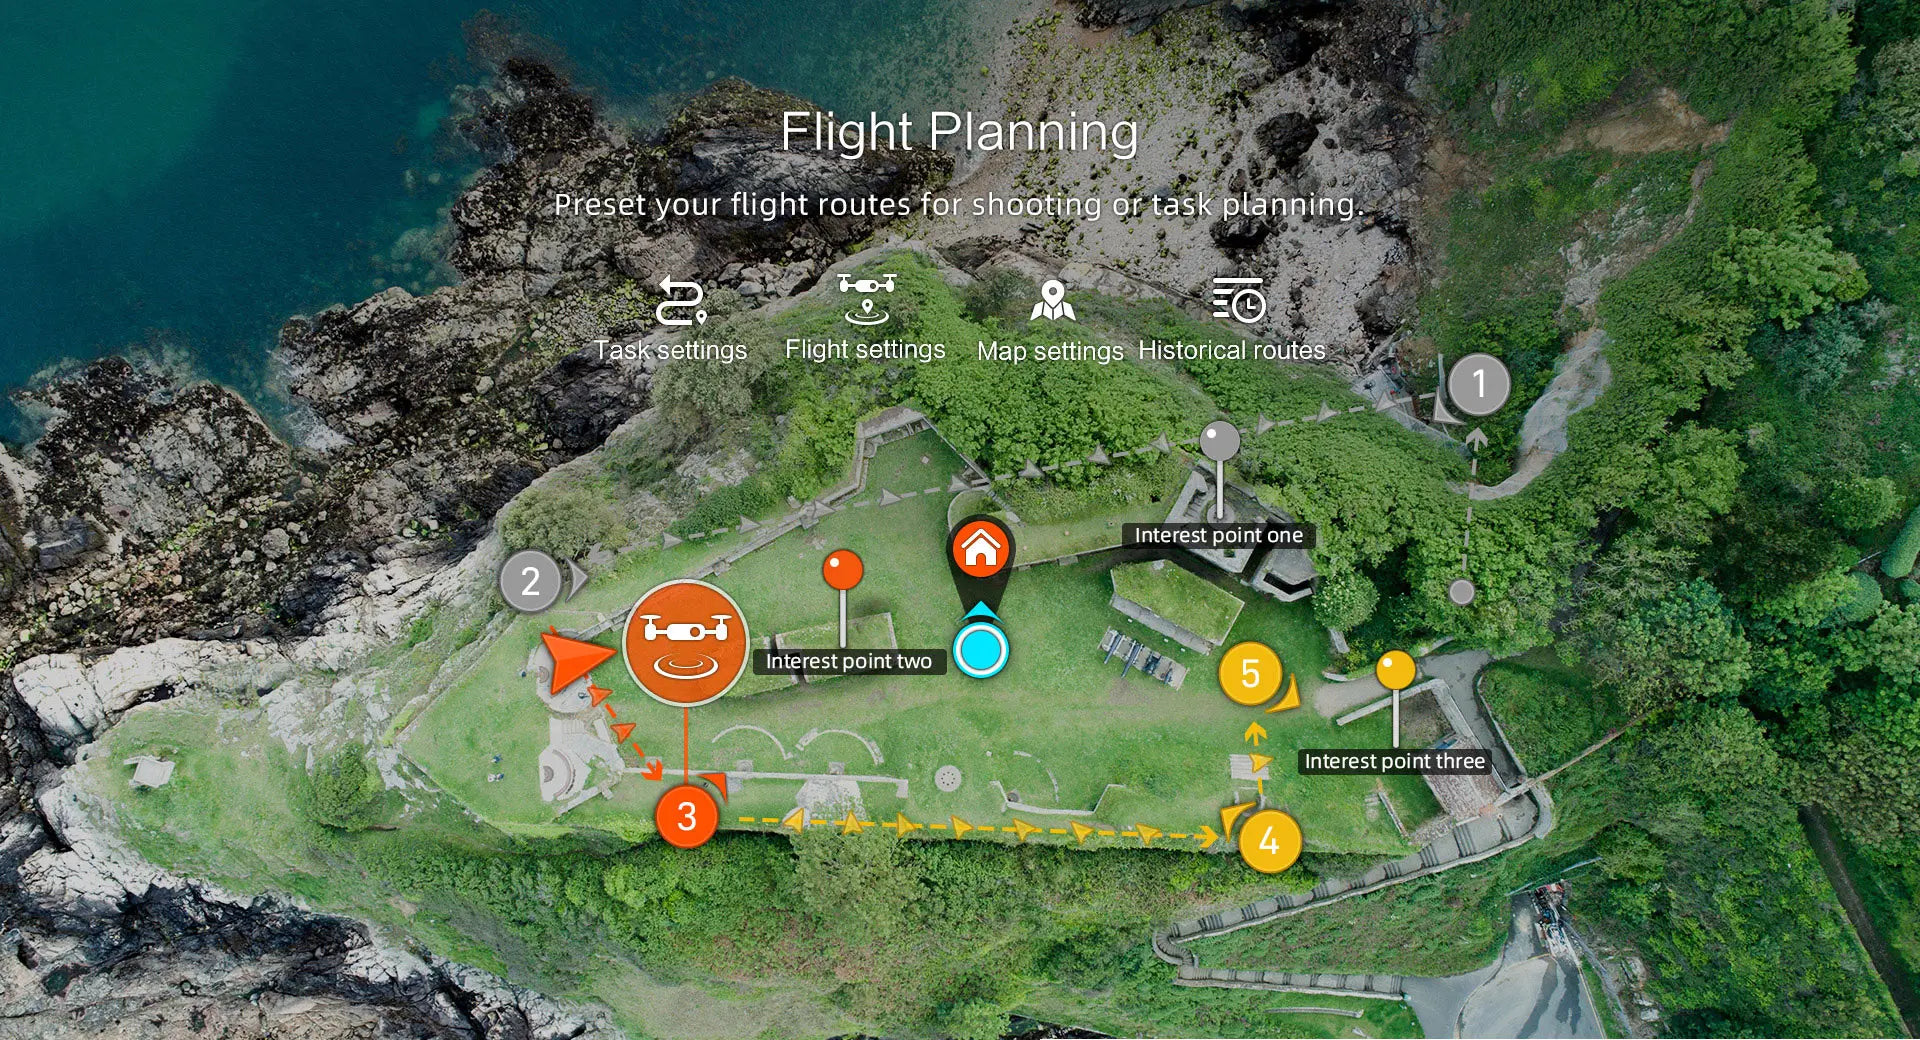 FIMI X8se 2022 V2 Drone, Flight Planning Preset your flight routes for shooting or taskplanning 2 Task settings Flight settings Map